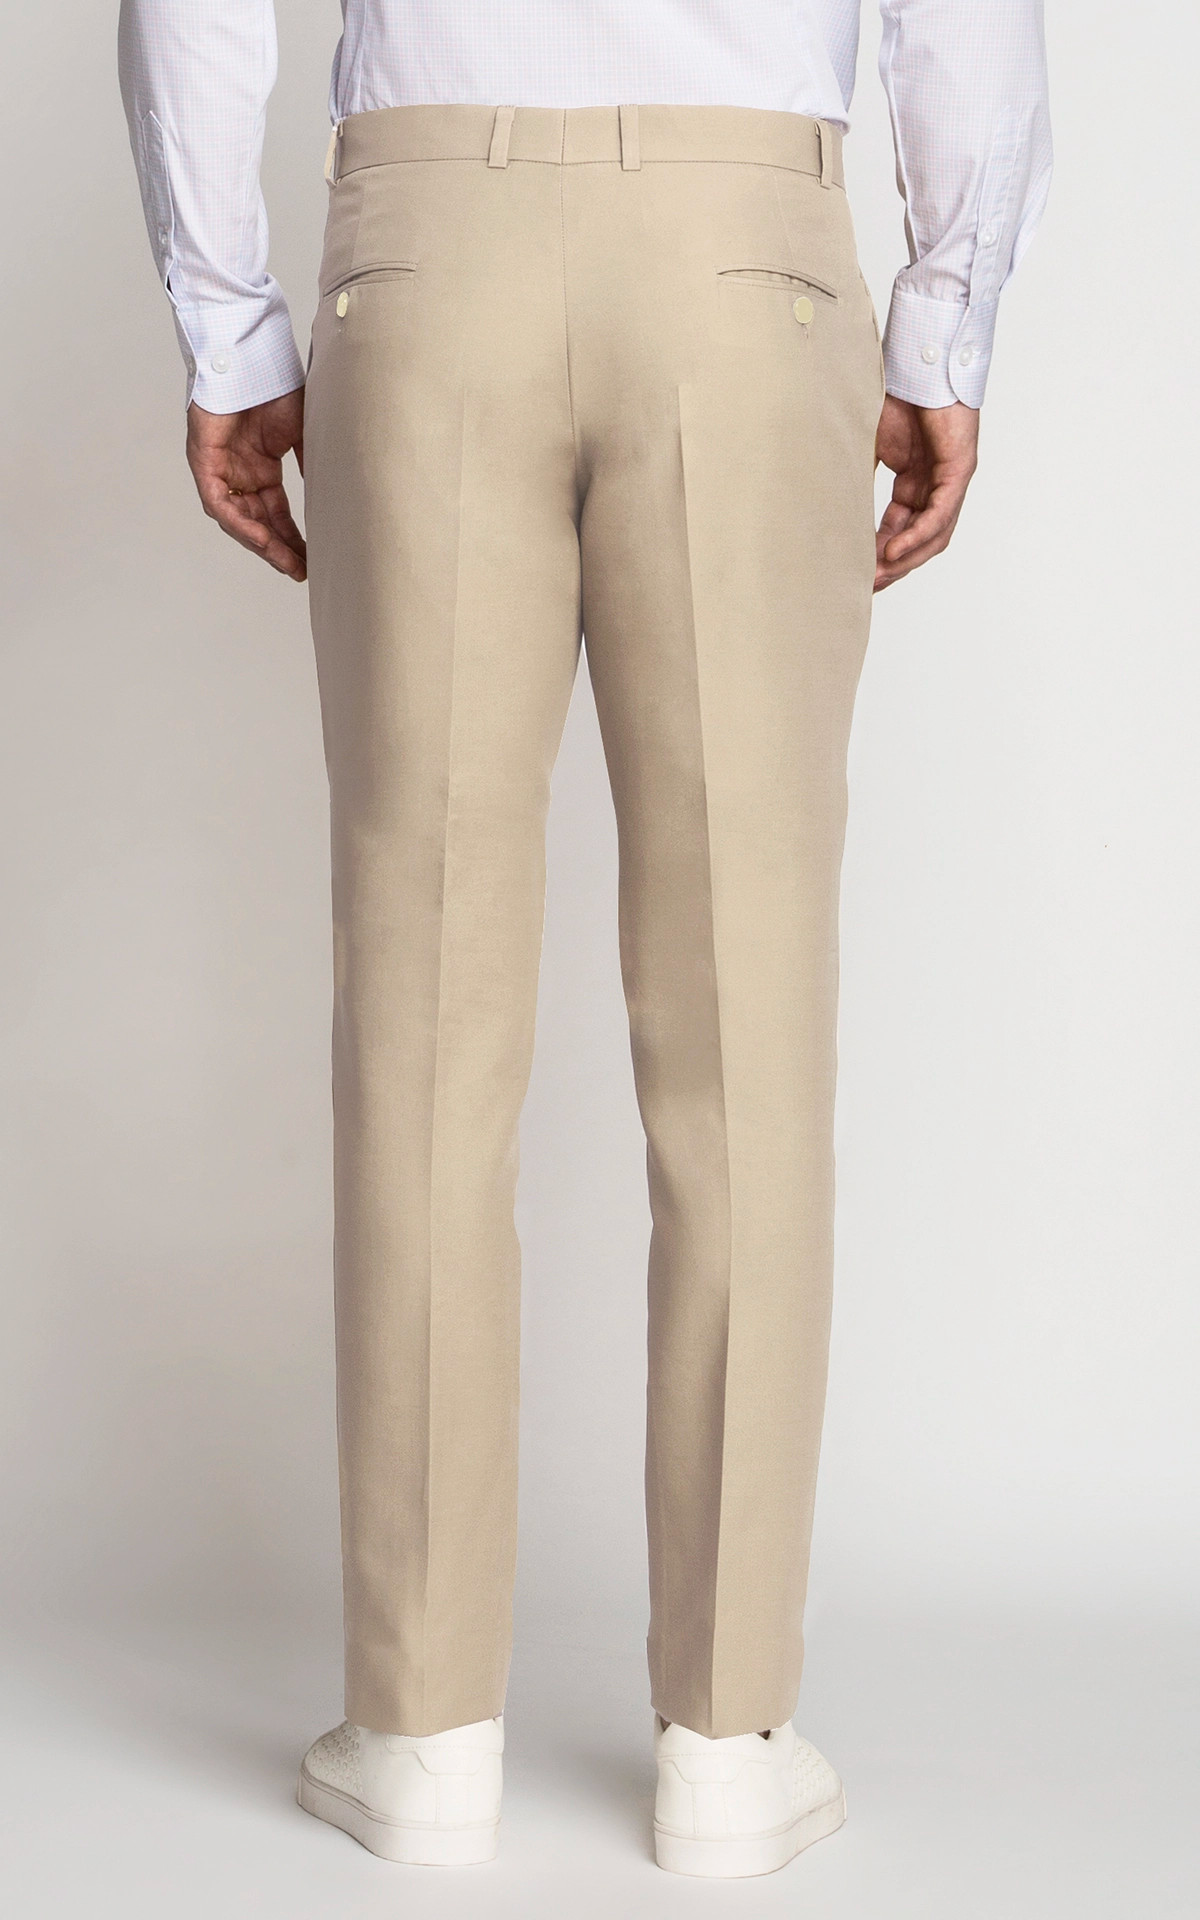 Khaki Cream Cotton Pants - Hangrr